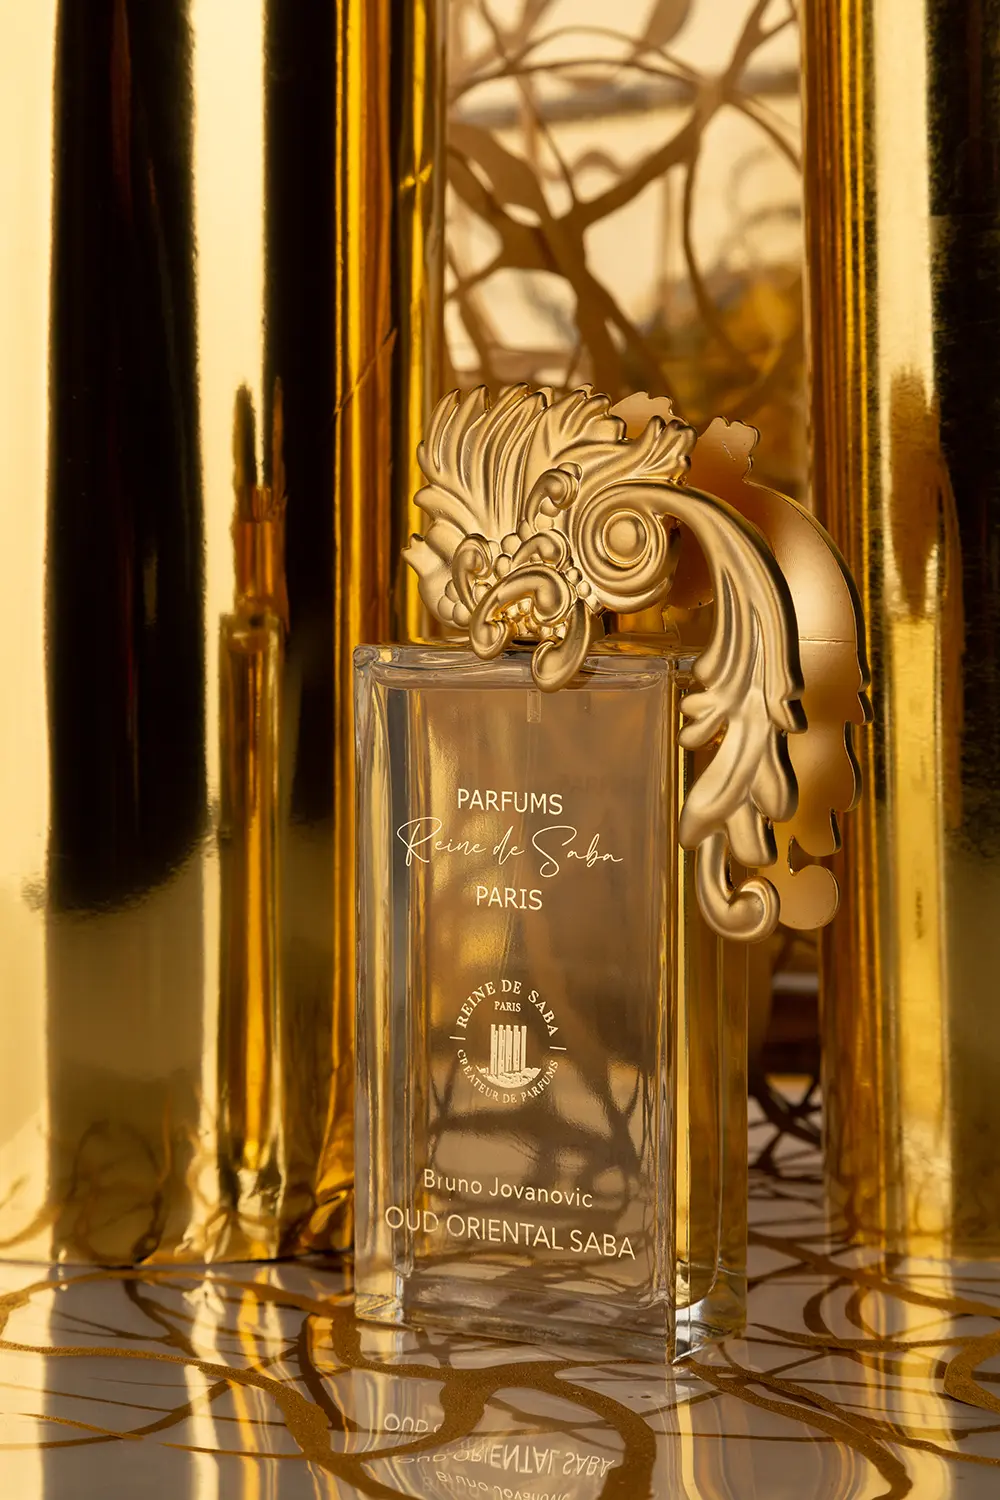 Oud Oriental Saba parfum